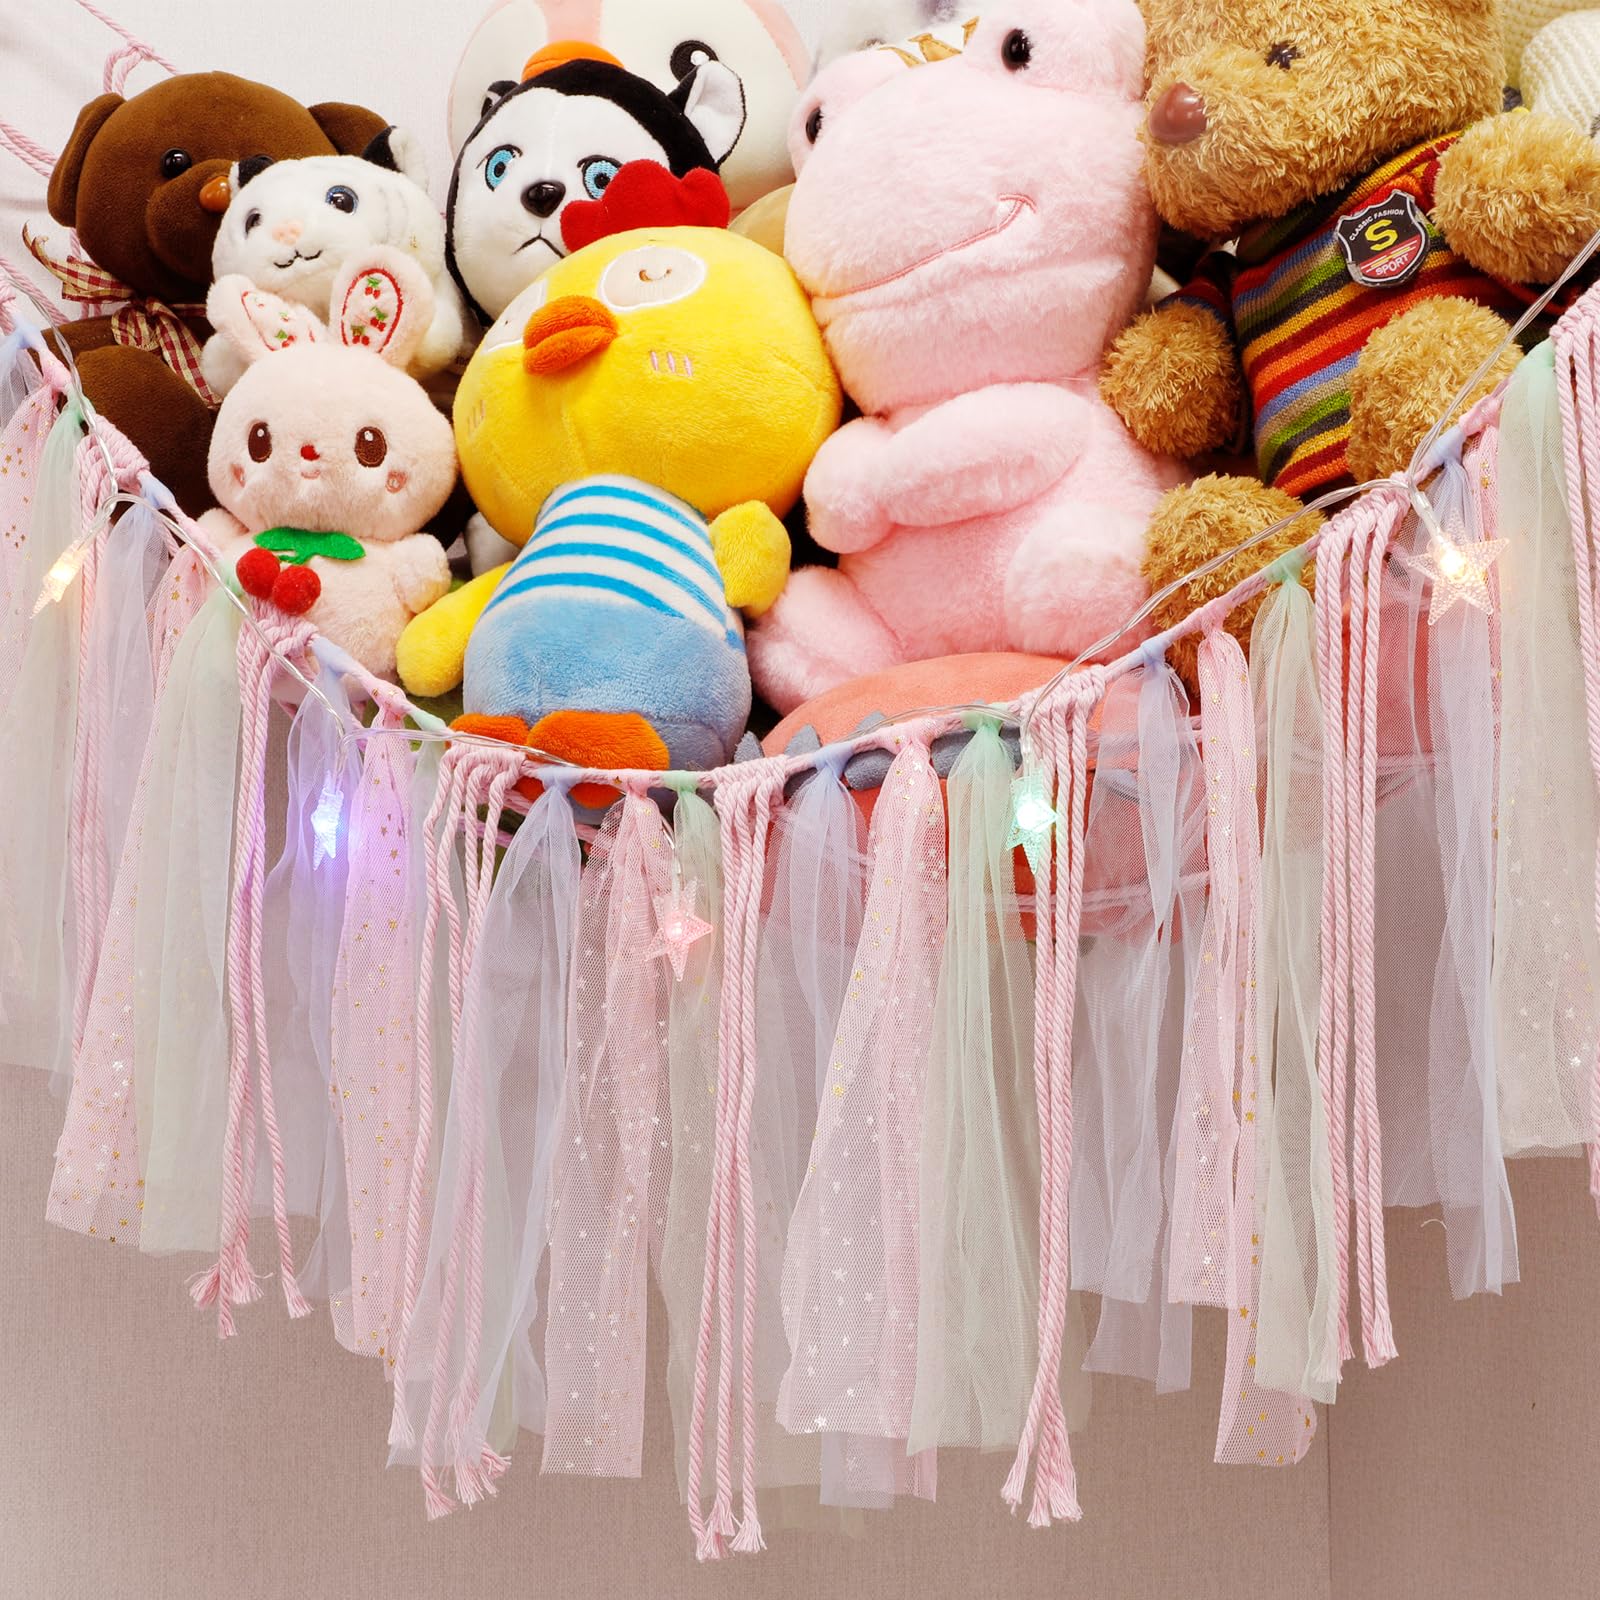 YELIENM Stuffed Animals Net or Hammock with LED Light, 59 inch Toy Hammock Net for Stuffed Animals Corner Hanging Stuffed Animal Storage Stuffed Animal Holder for Nursery Kids Bedroom (Pink)…